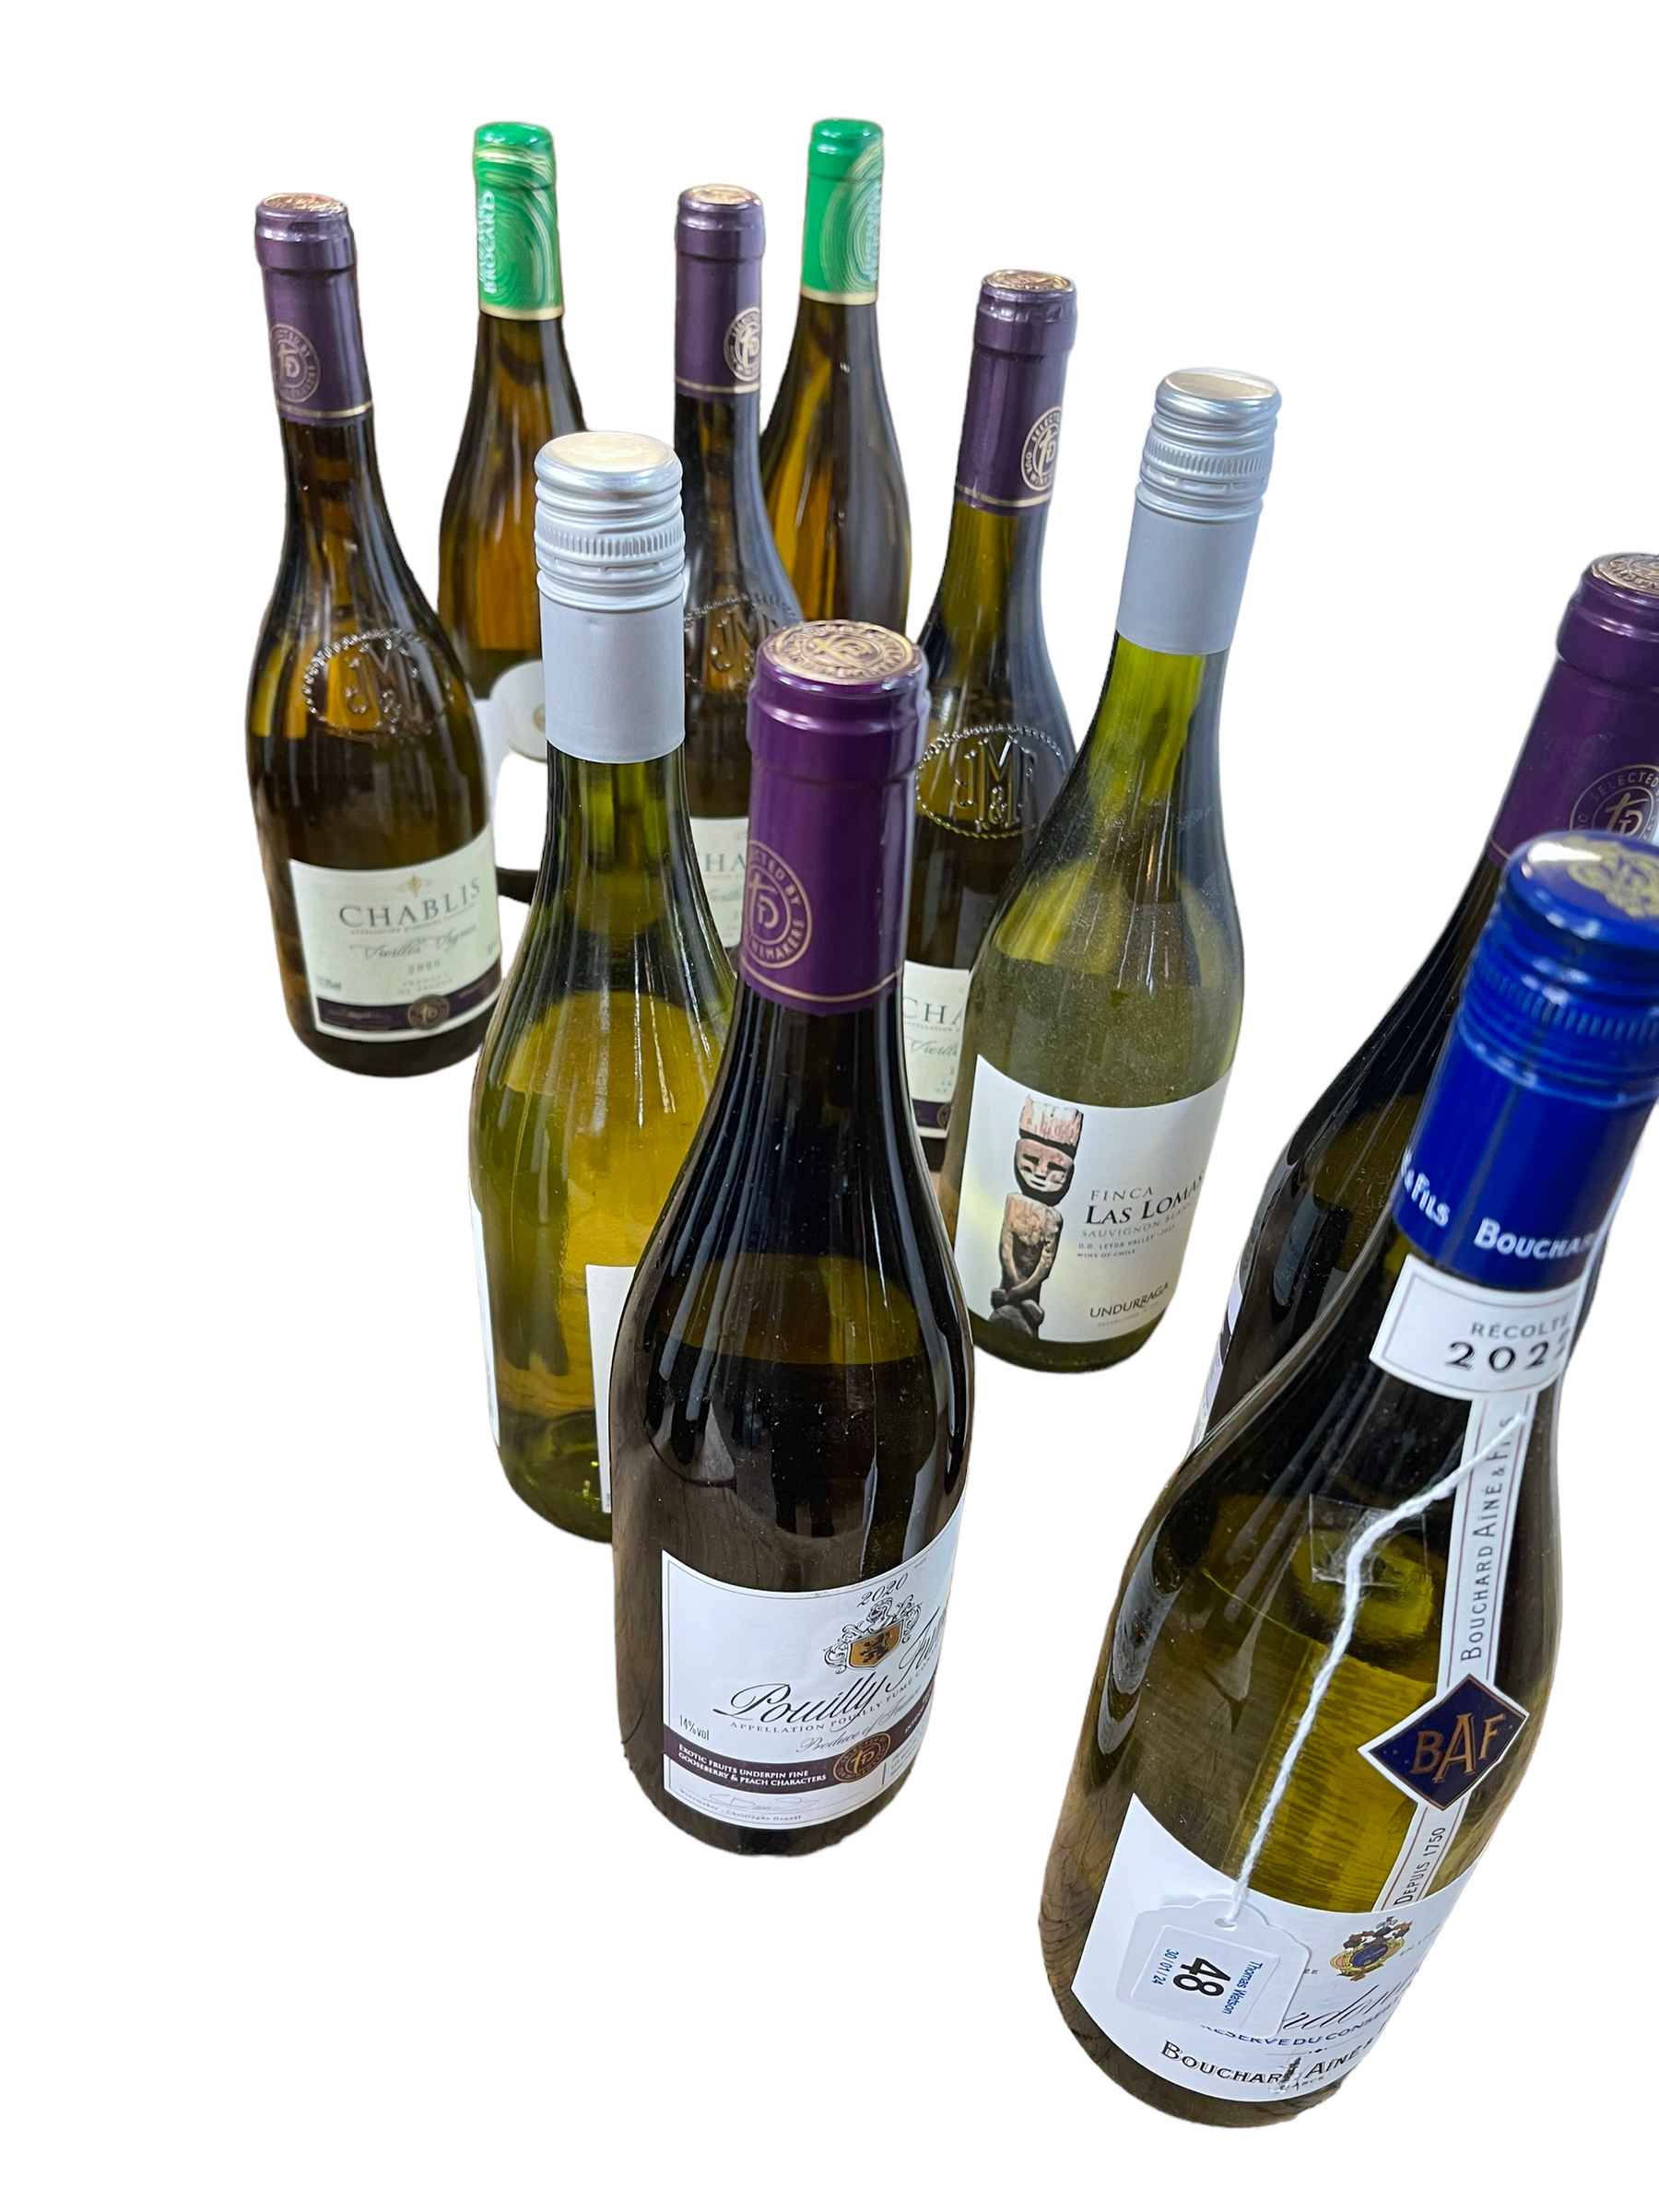 Ten bottles of white wine including Chablis Vieilles Vignes 2020, Pouilly Fume 2020, etc.